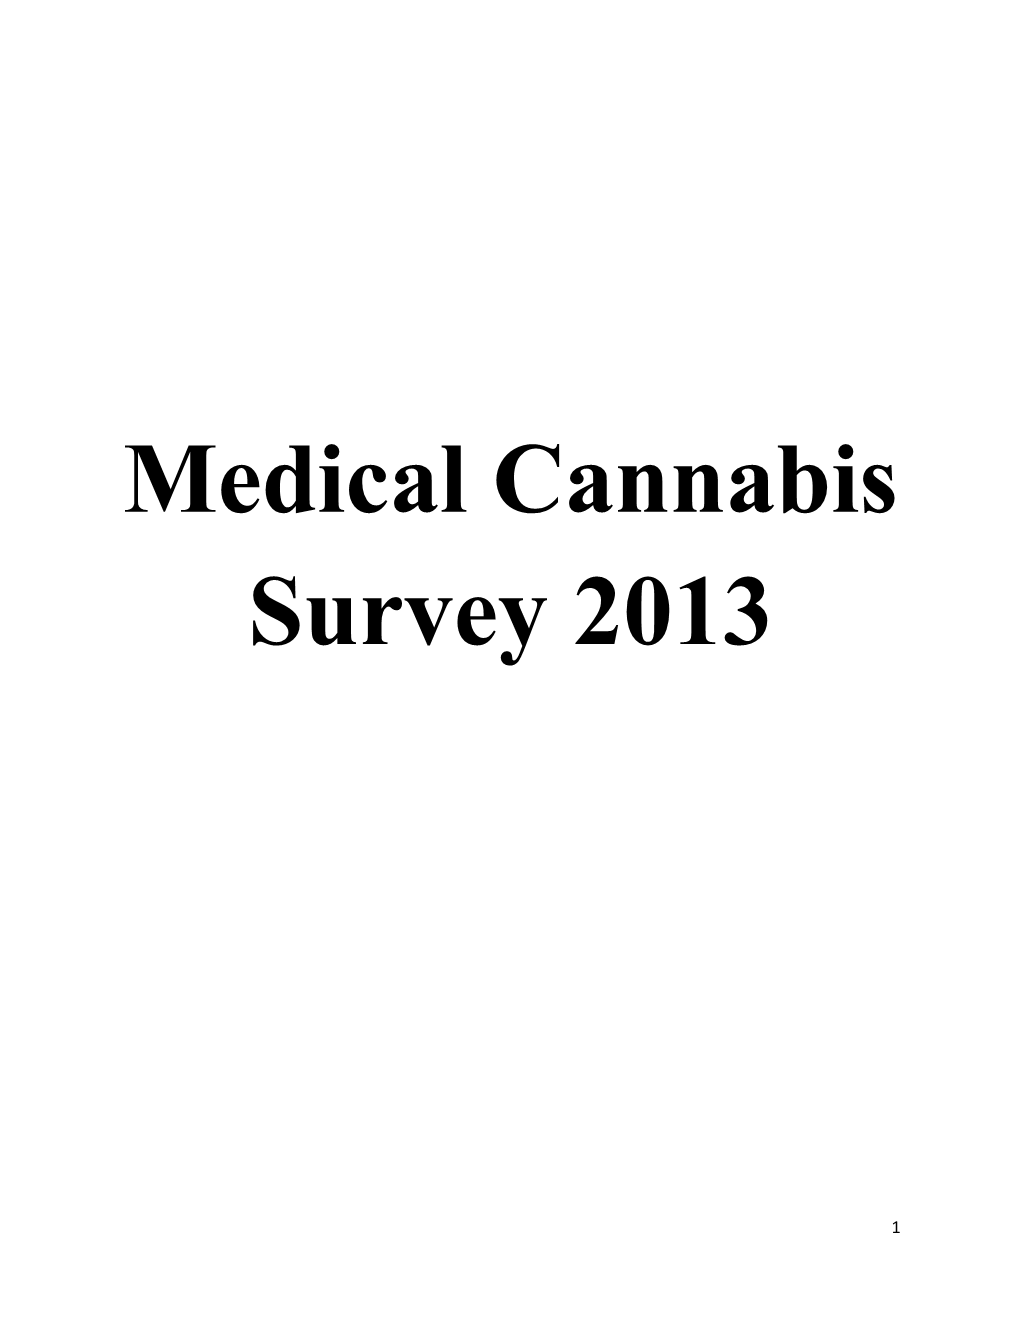 Medical Cannabis Survey 2013